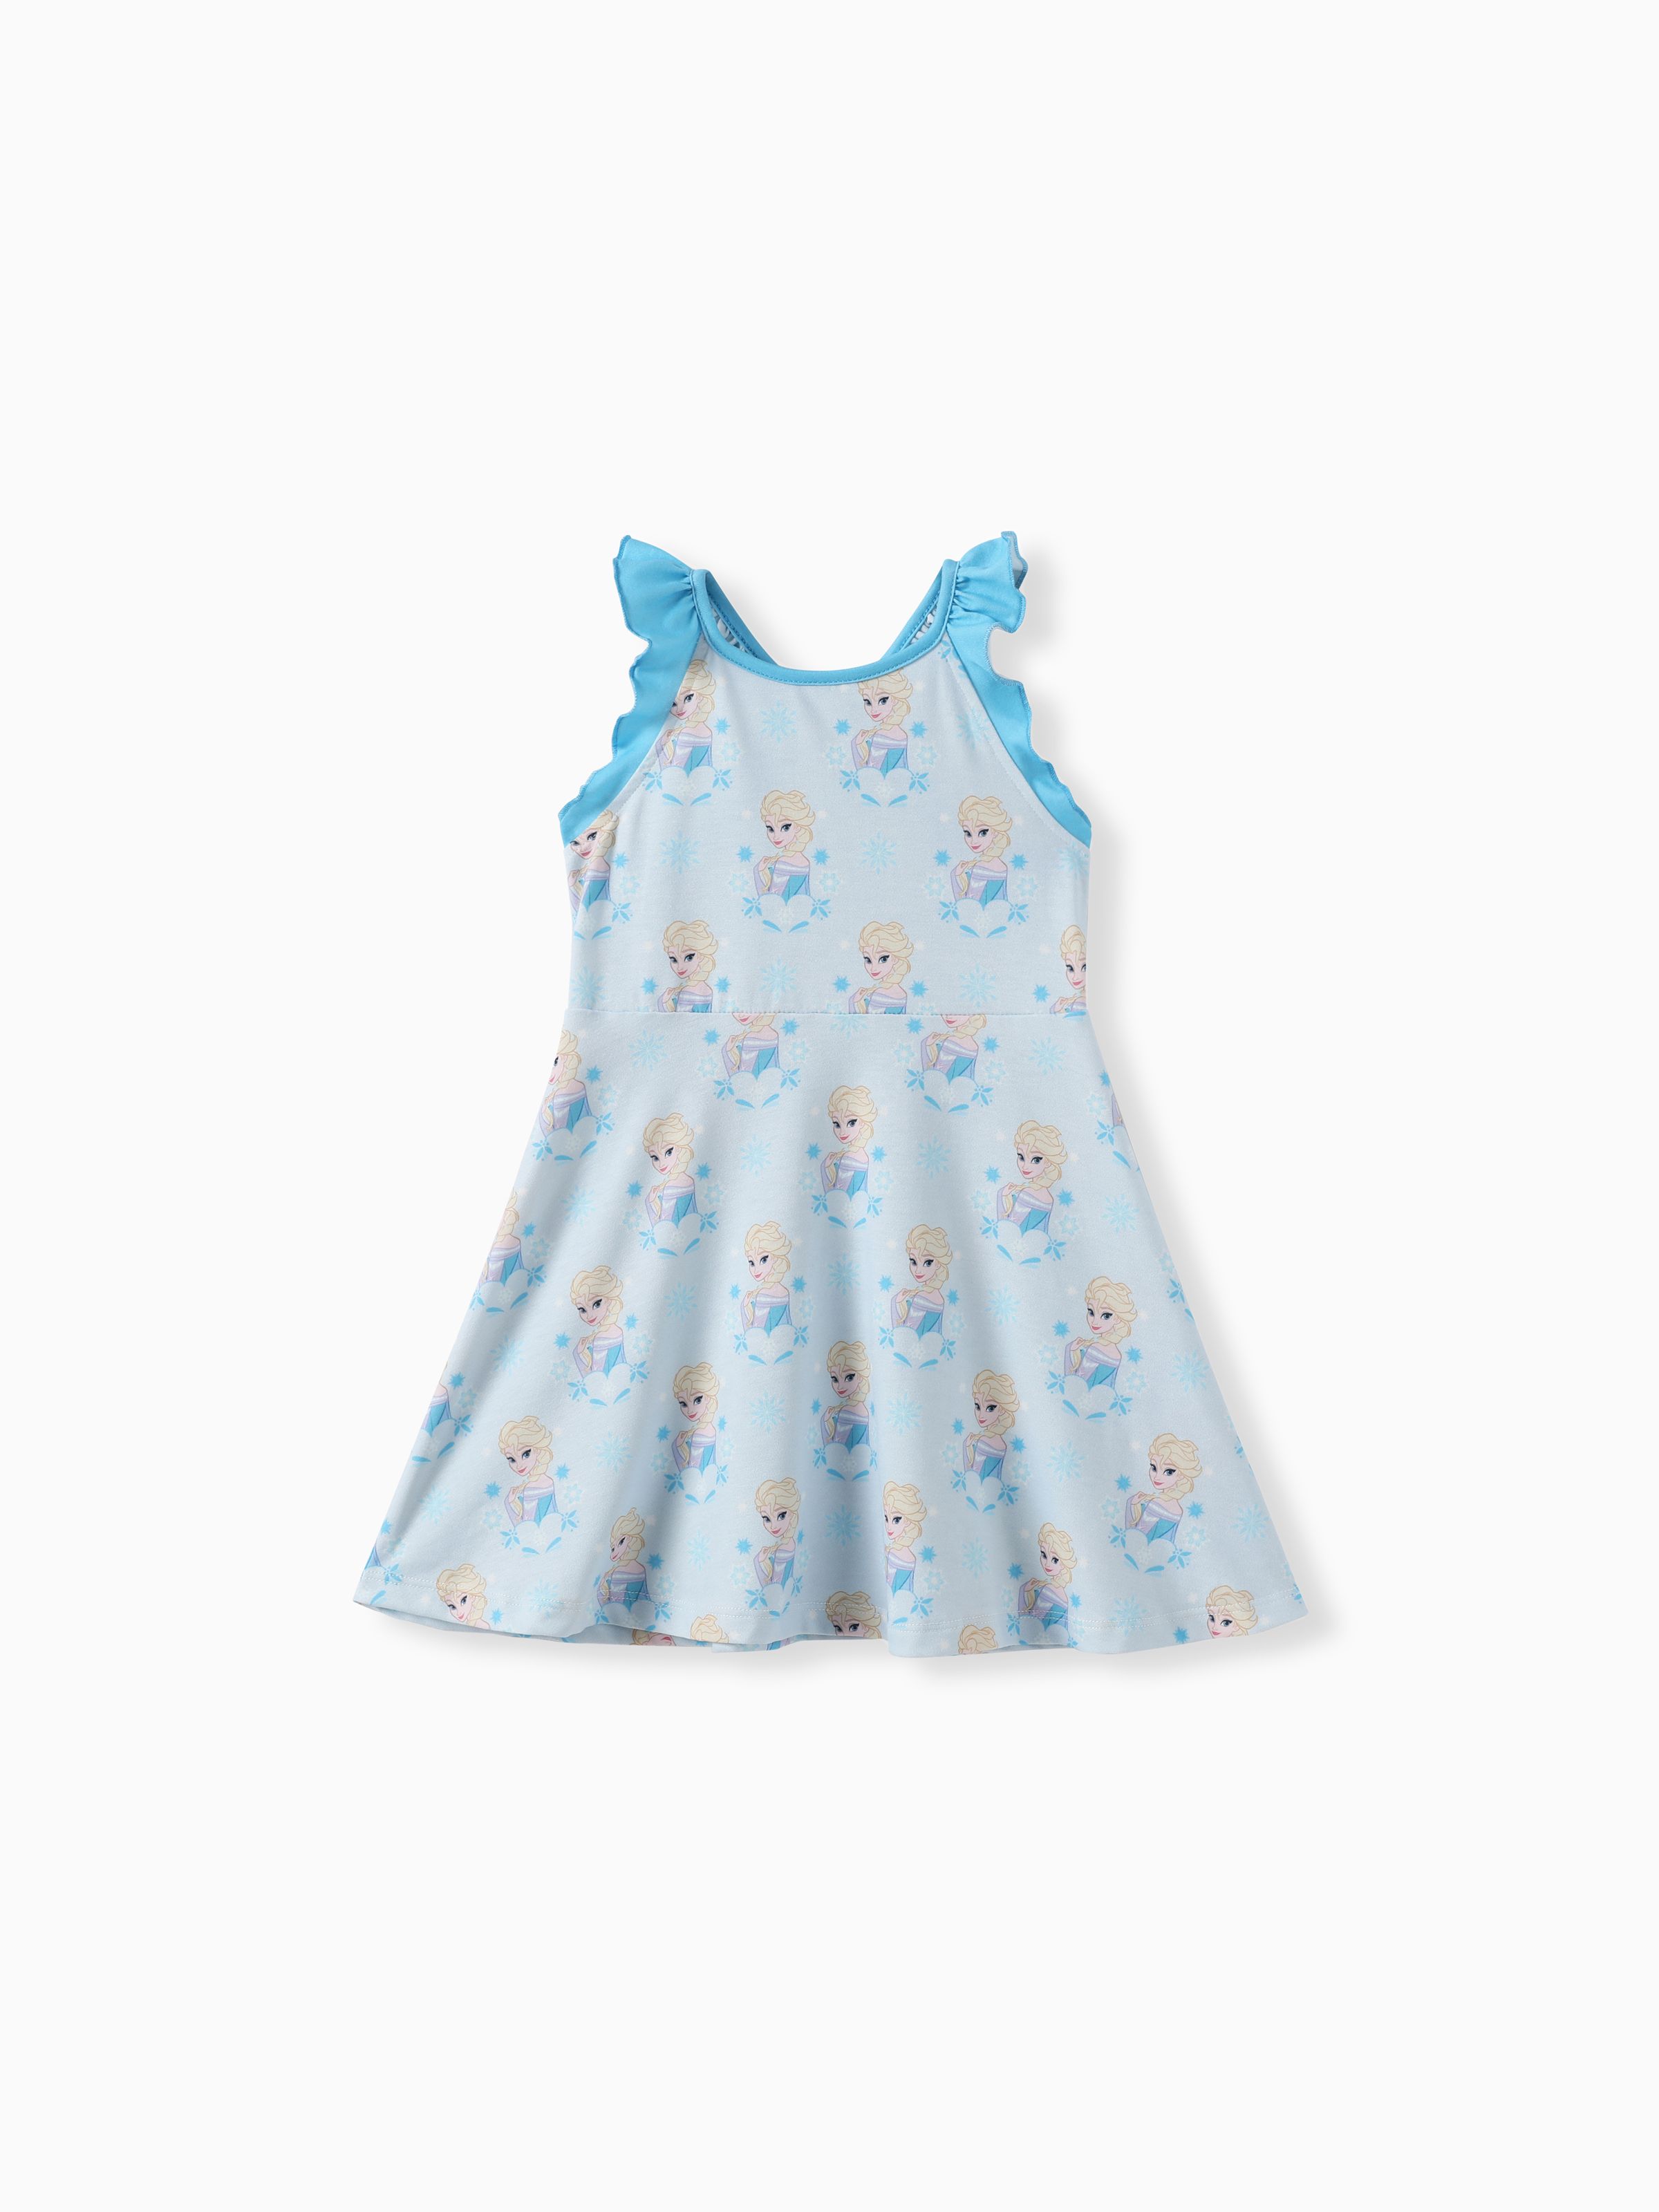 

Disney Frozen Toddler Girls Elsa/Anna 1pc Naia™ Character All-over Print Ruffled Dress